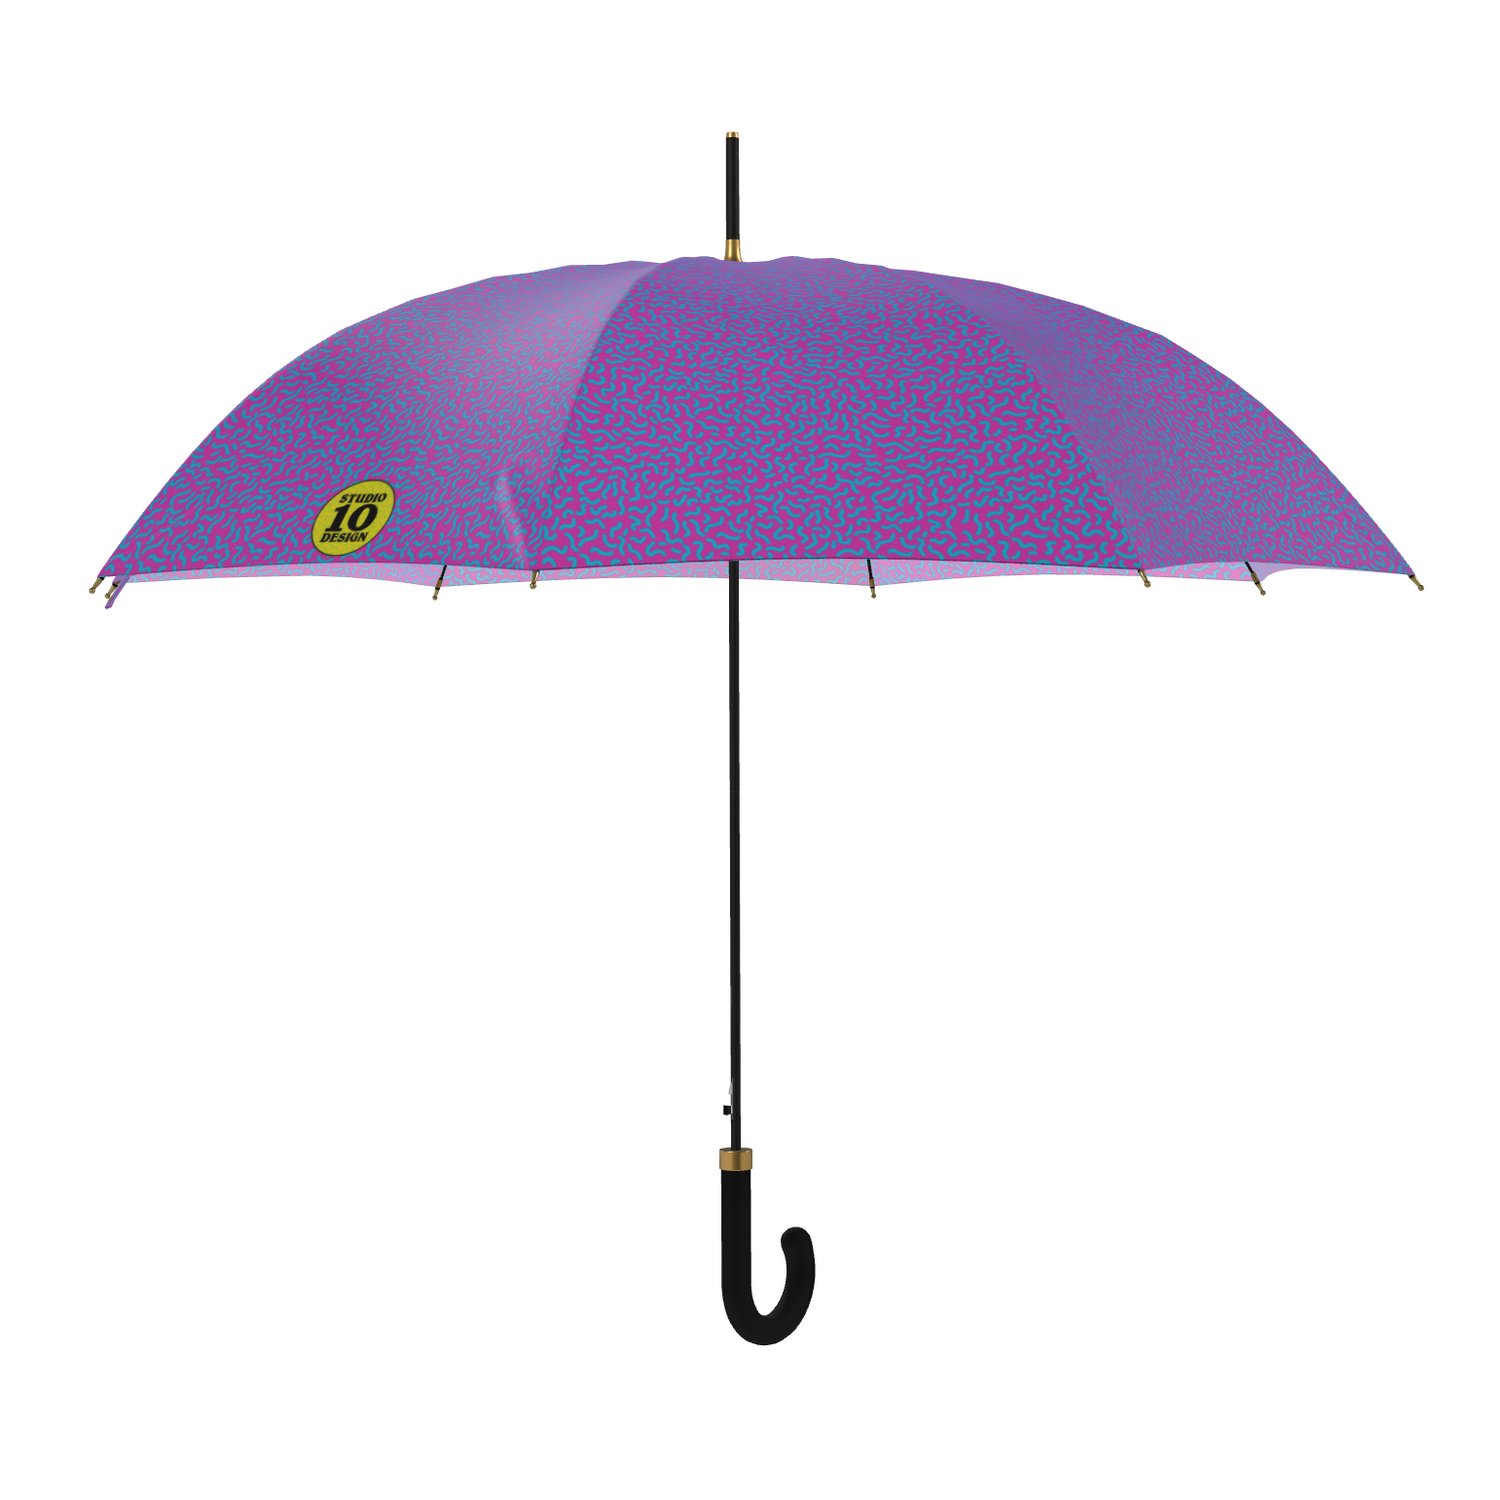 Umbrellas by Studio Ten Design